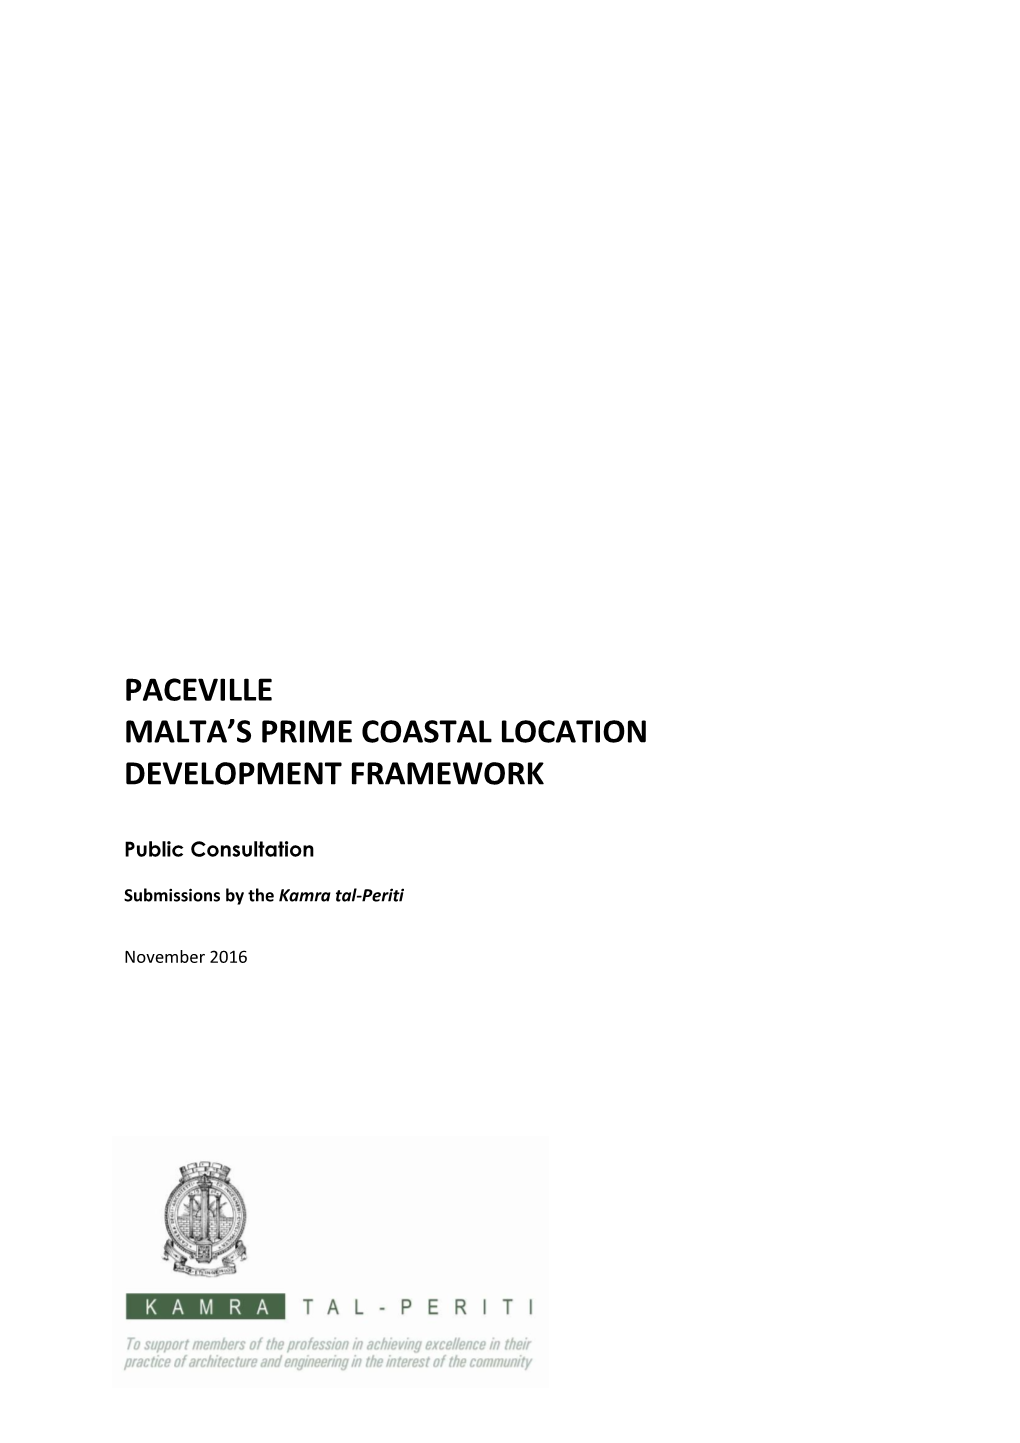 Paceville Malta's Prime Coastal Location